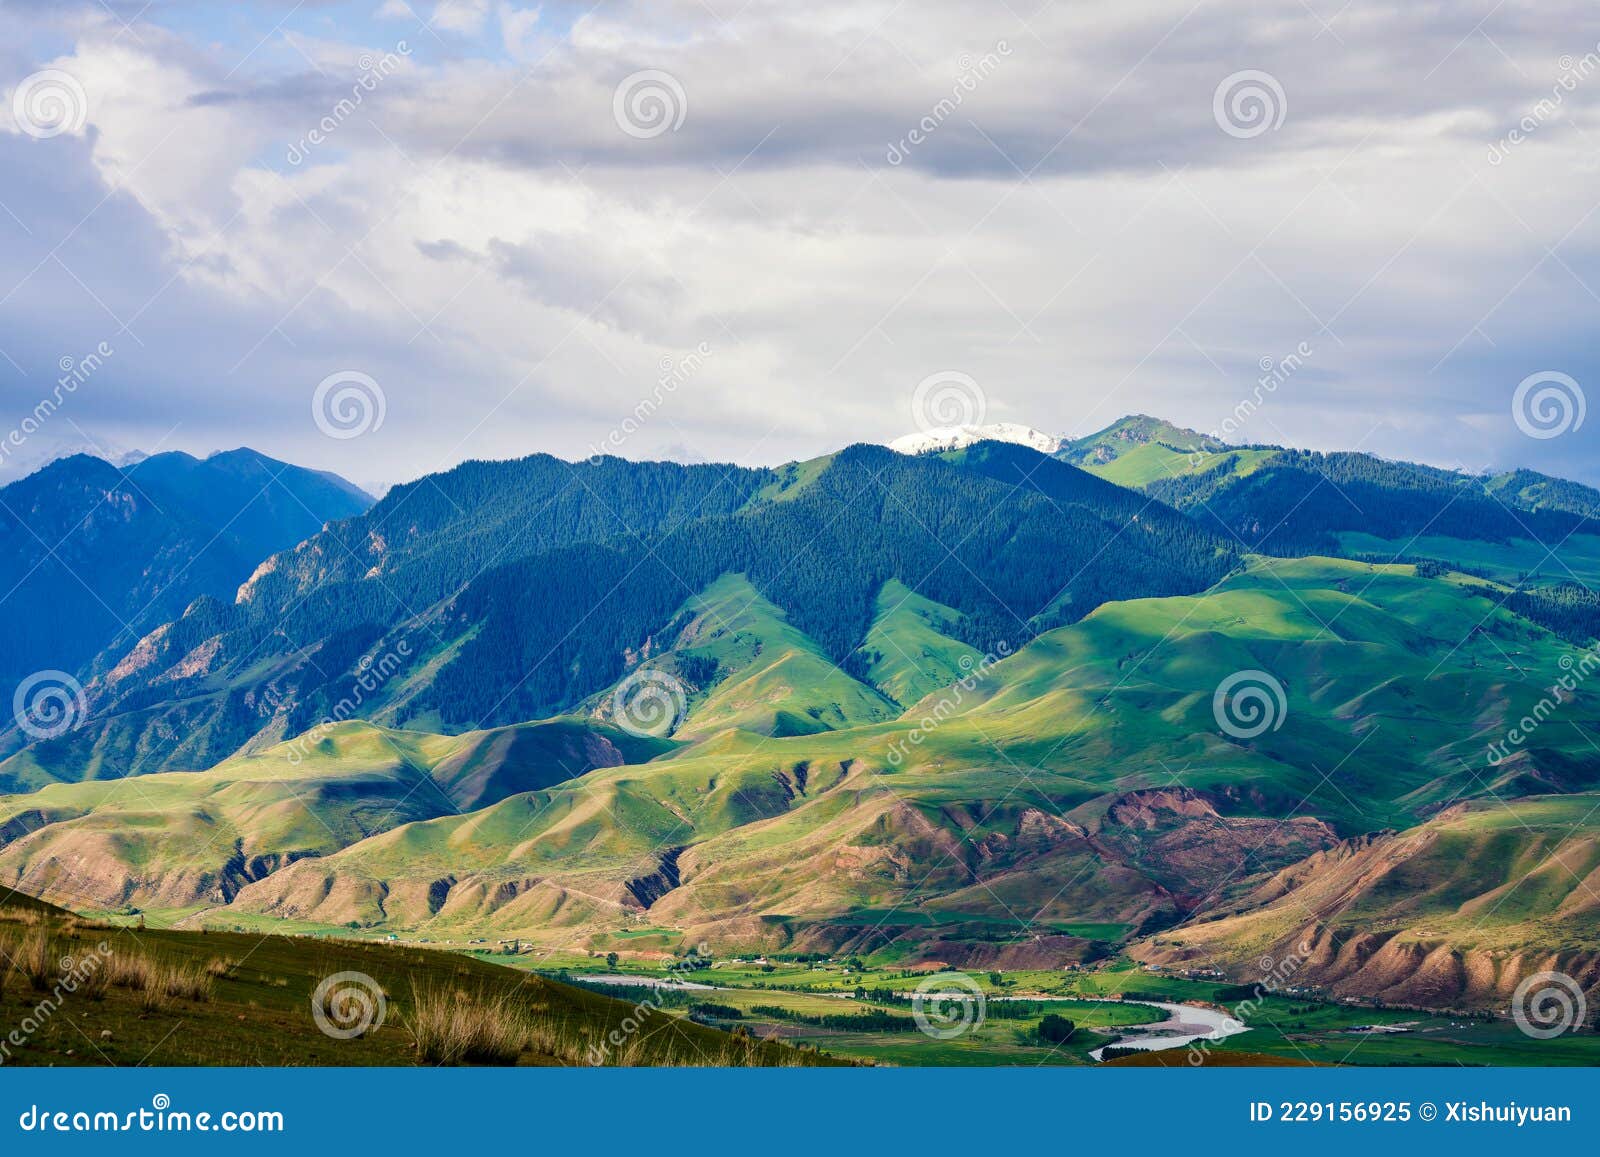 the mountains summer in tekesi county